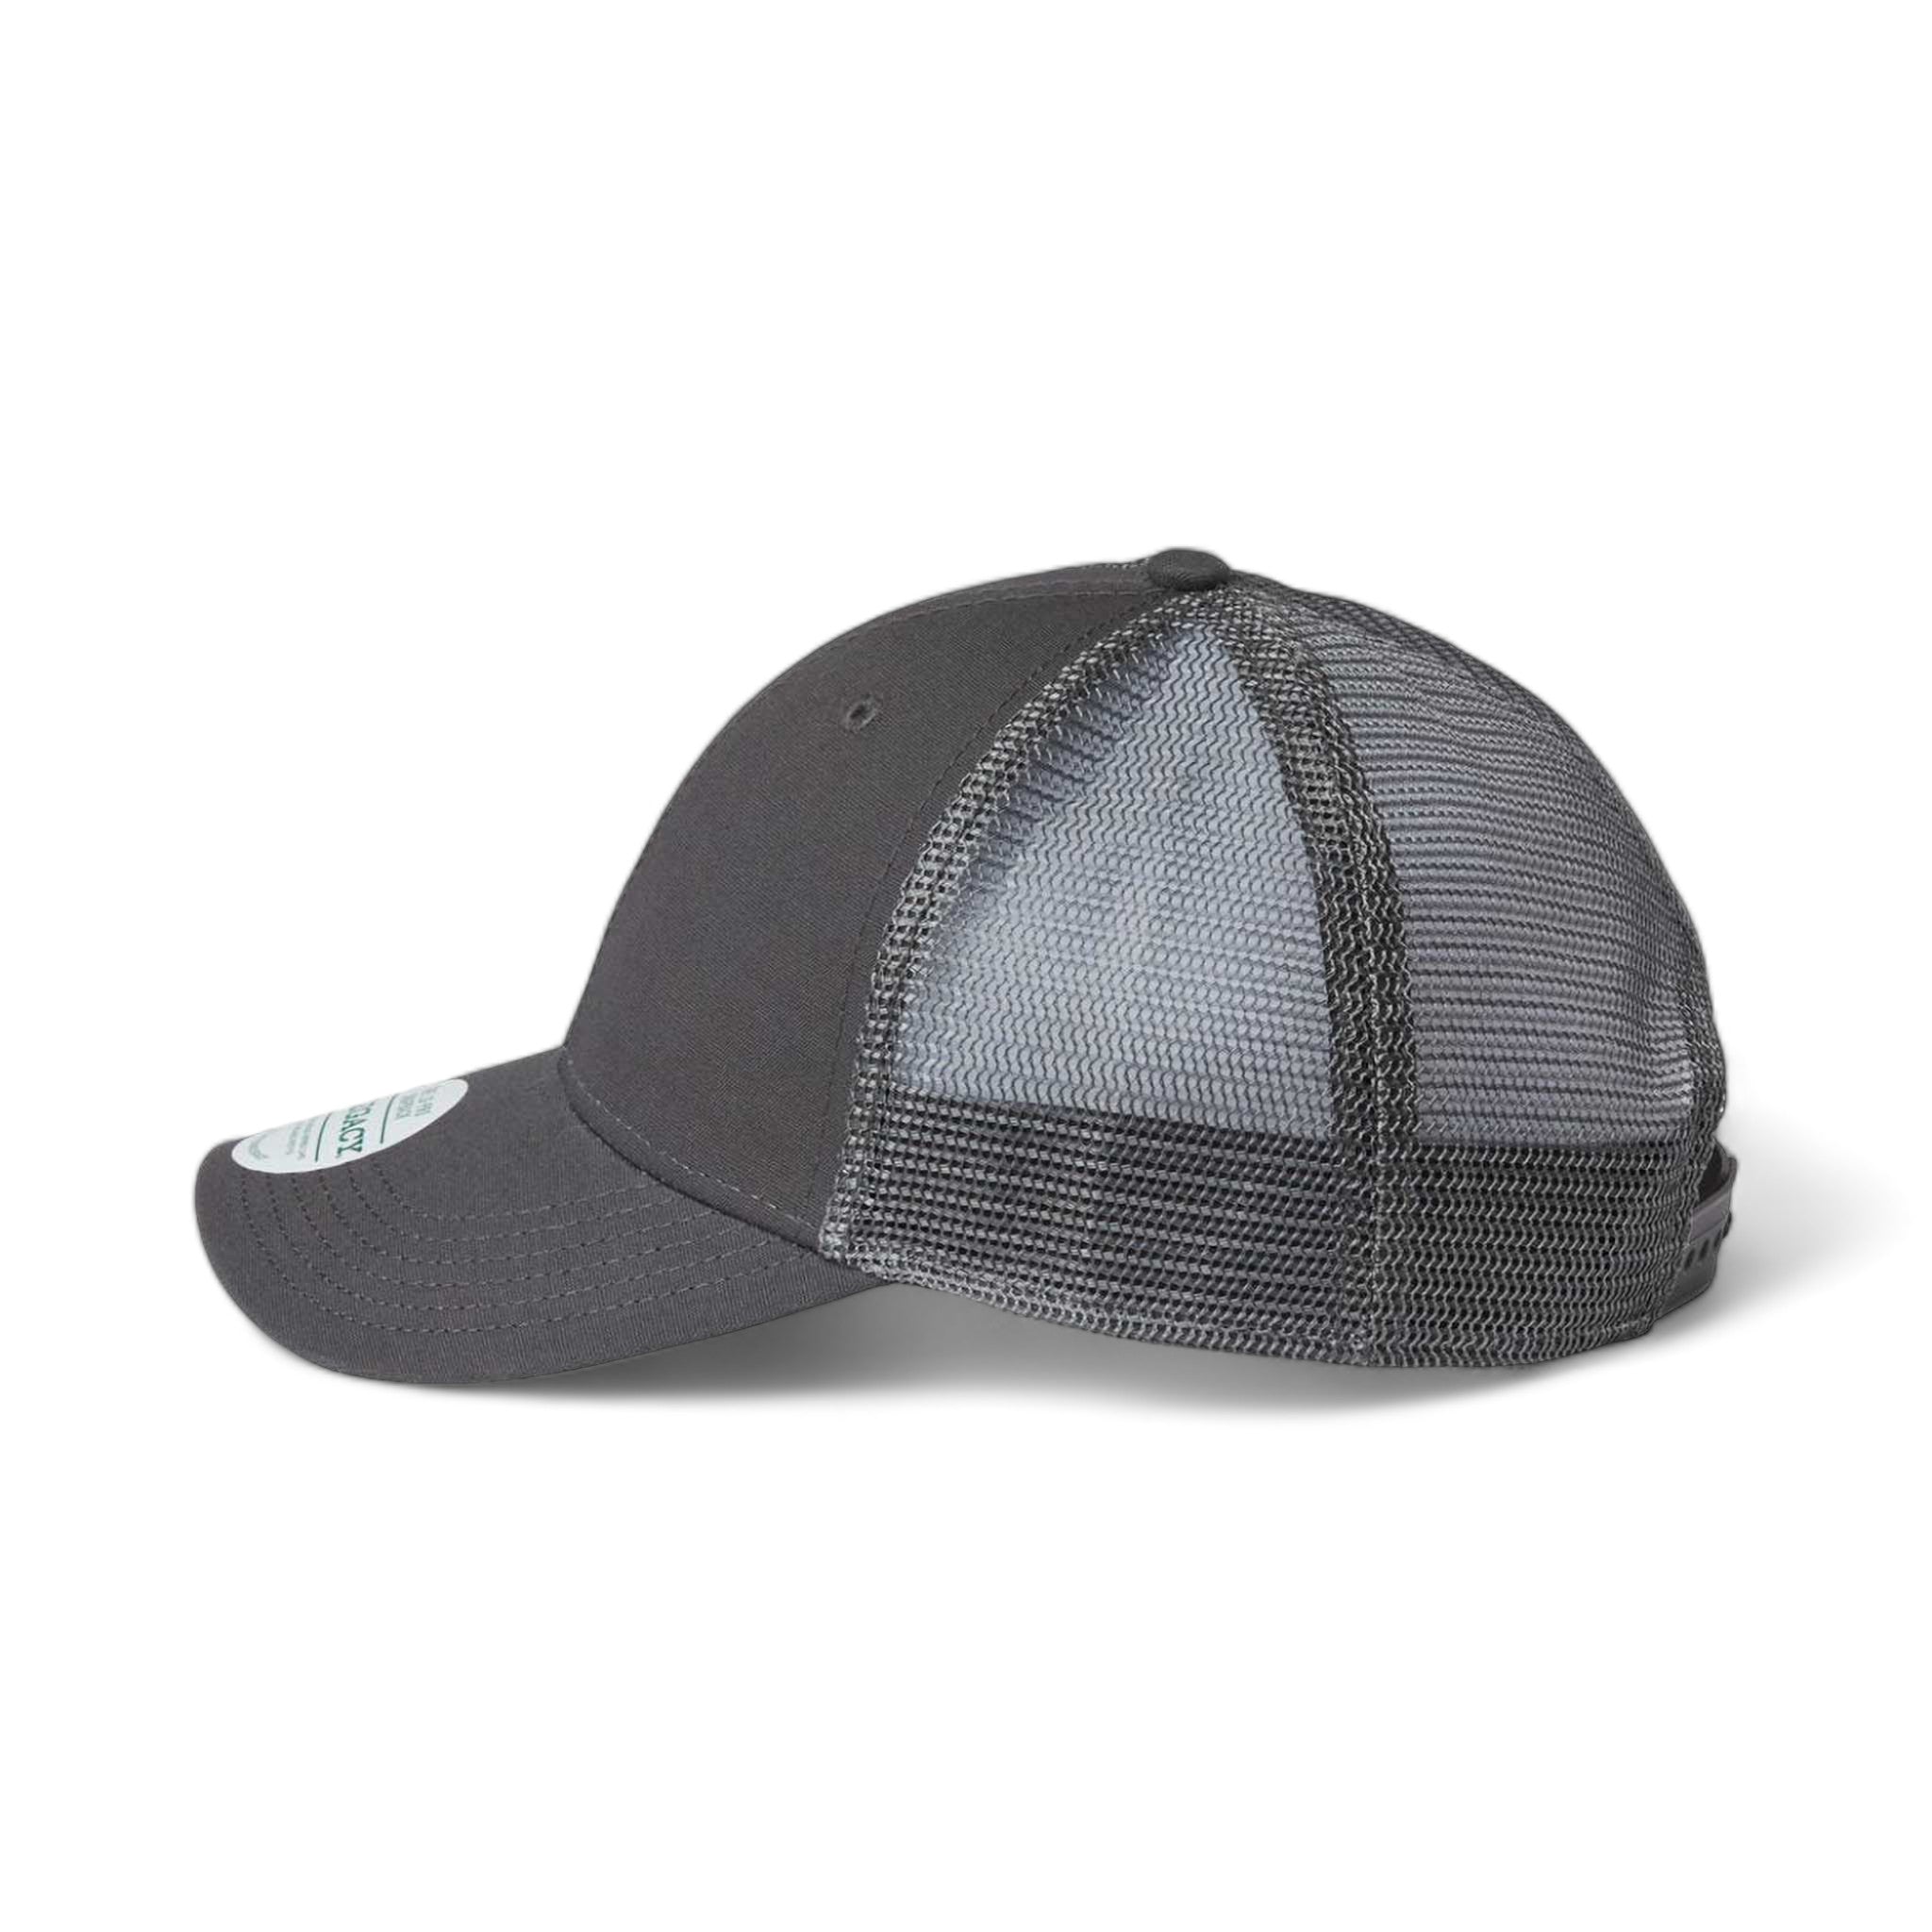 Side view of LEGACY LPS custom hat in dark grey and dark grey